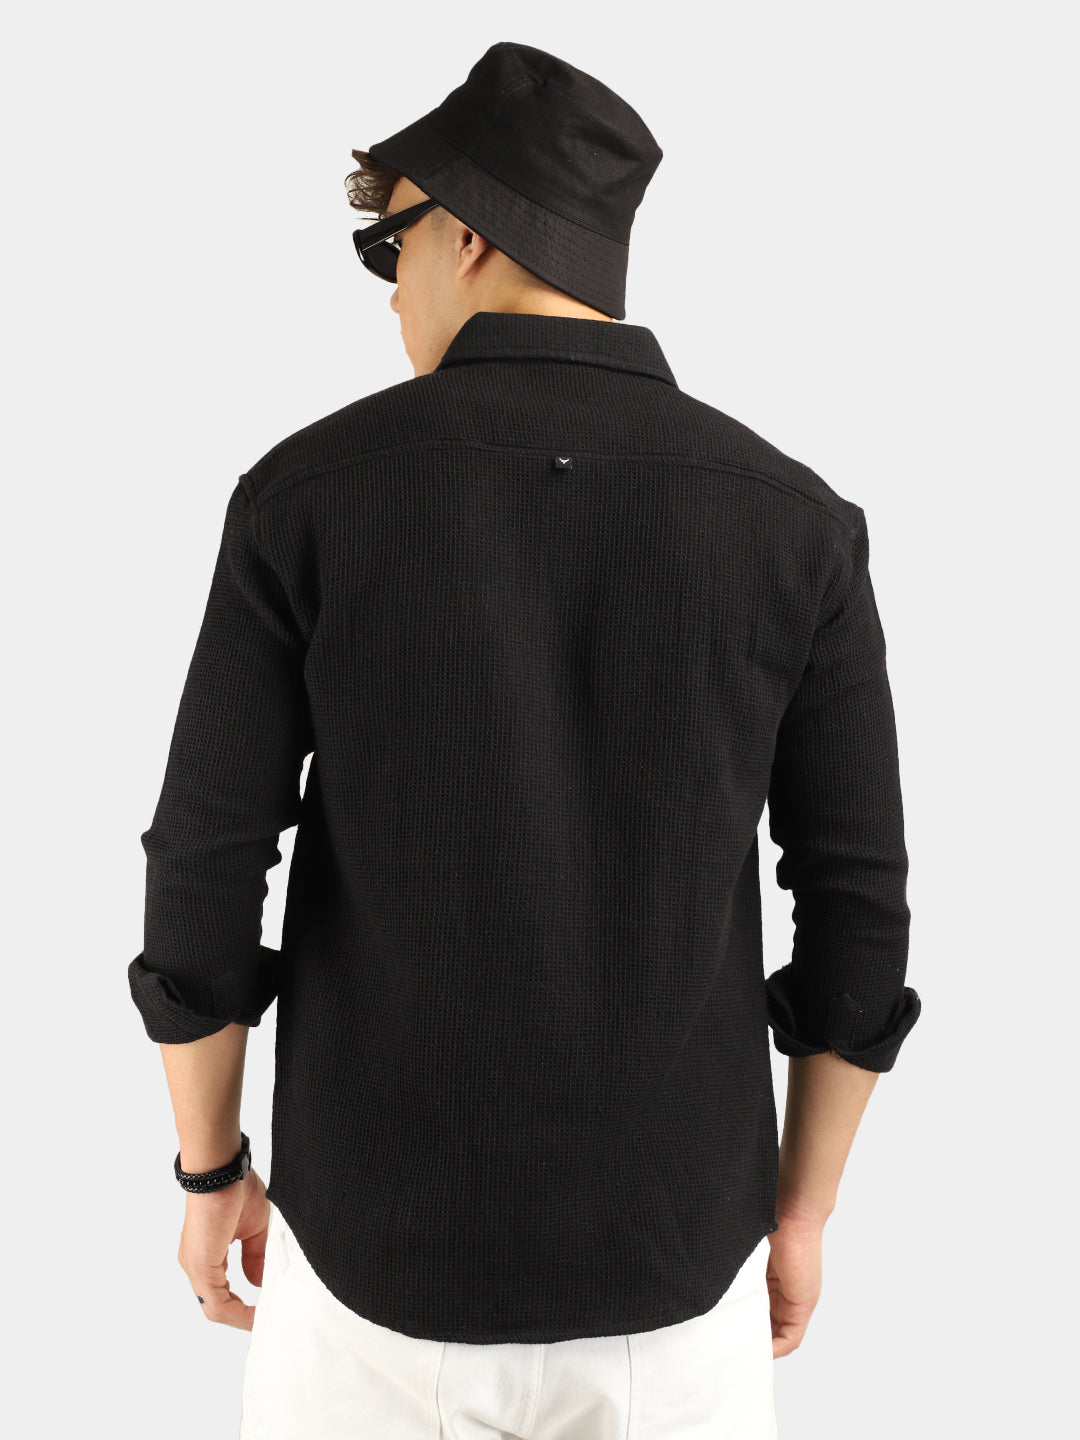 Abseyss texture Black Checked Shirt